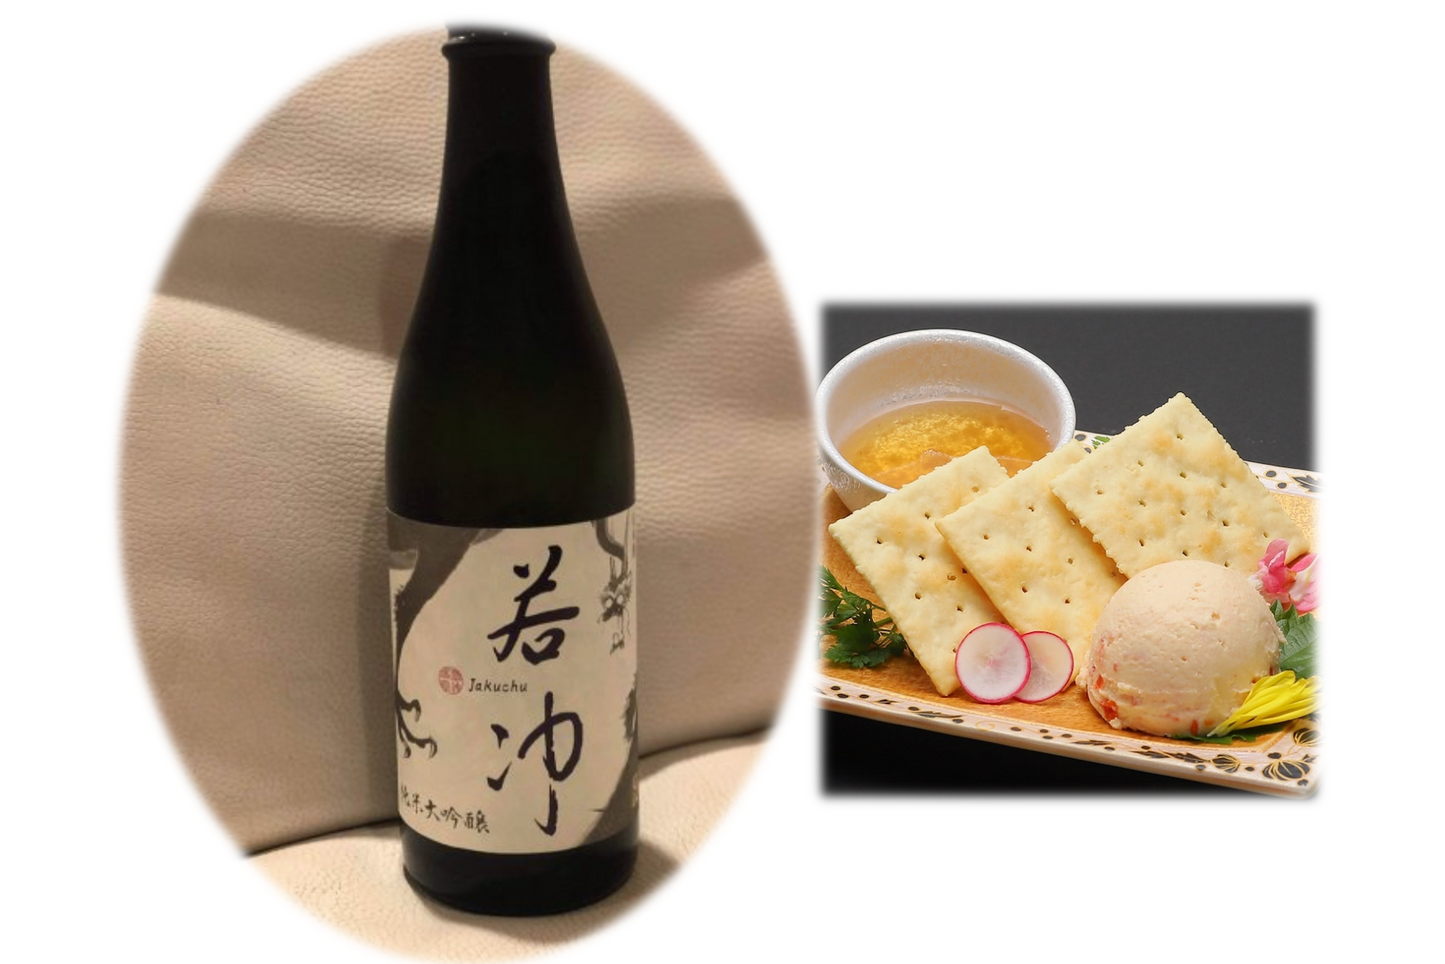 [Home Drinking Yokocho Collaboration] Jakuchu Junmai Daiginjo Raw Genshu Taniguchi Sake Brewery & “Home Drinking Yokocho” Snack Set 3 <Homemade sake lees cream cheese>